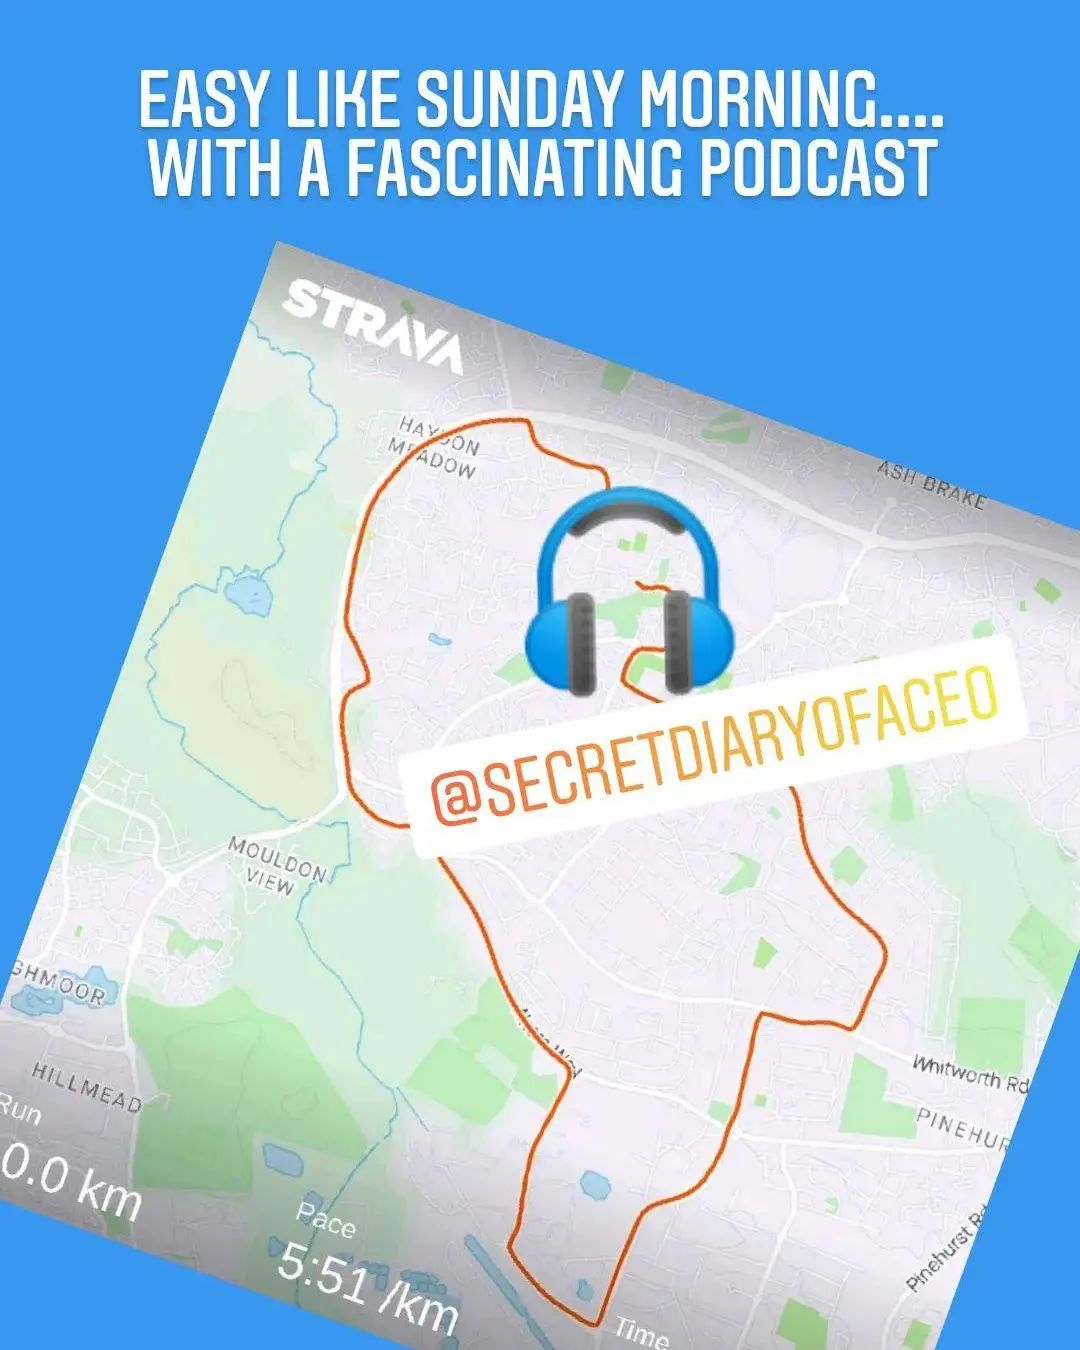 Fascinating podcast on this morning's run! @secretdiaryofaceo #running #runningmotivation #runnersofinstagram #podcasts #podcast #ukrunchat